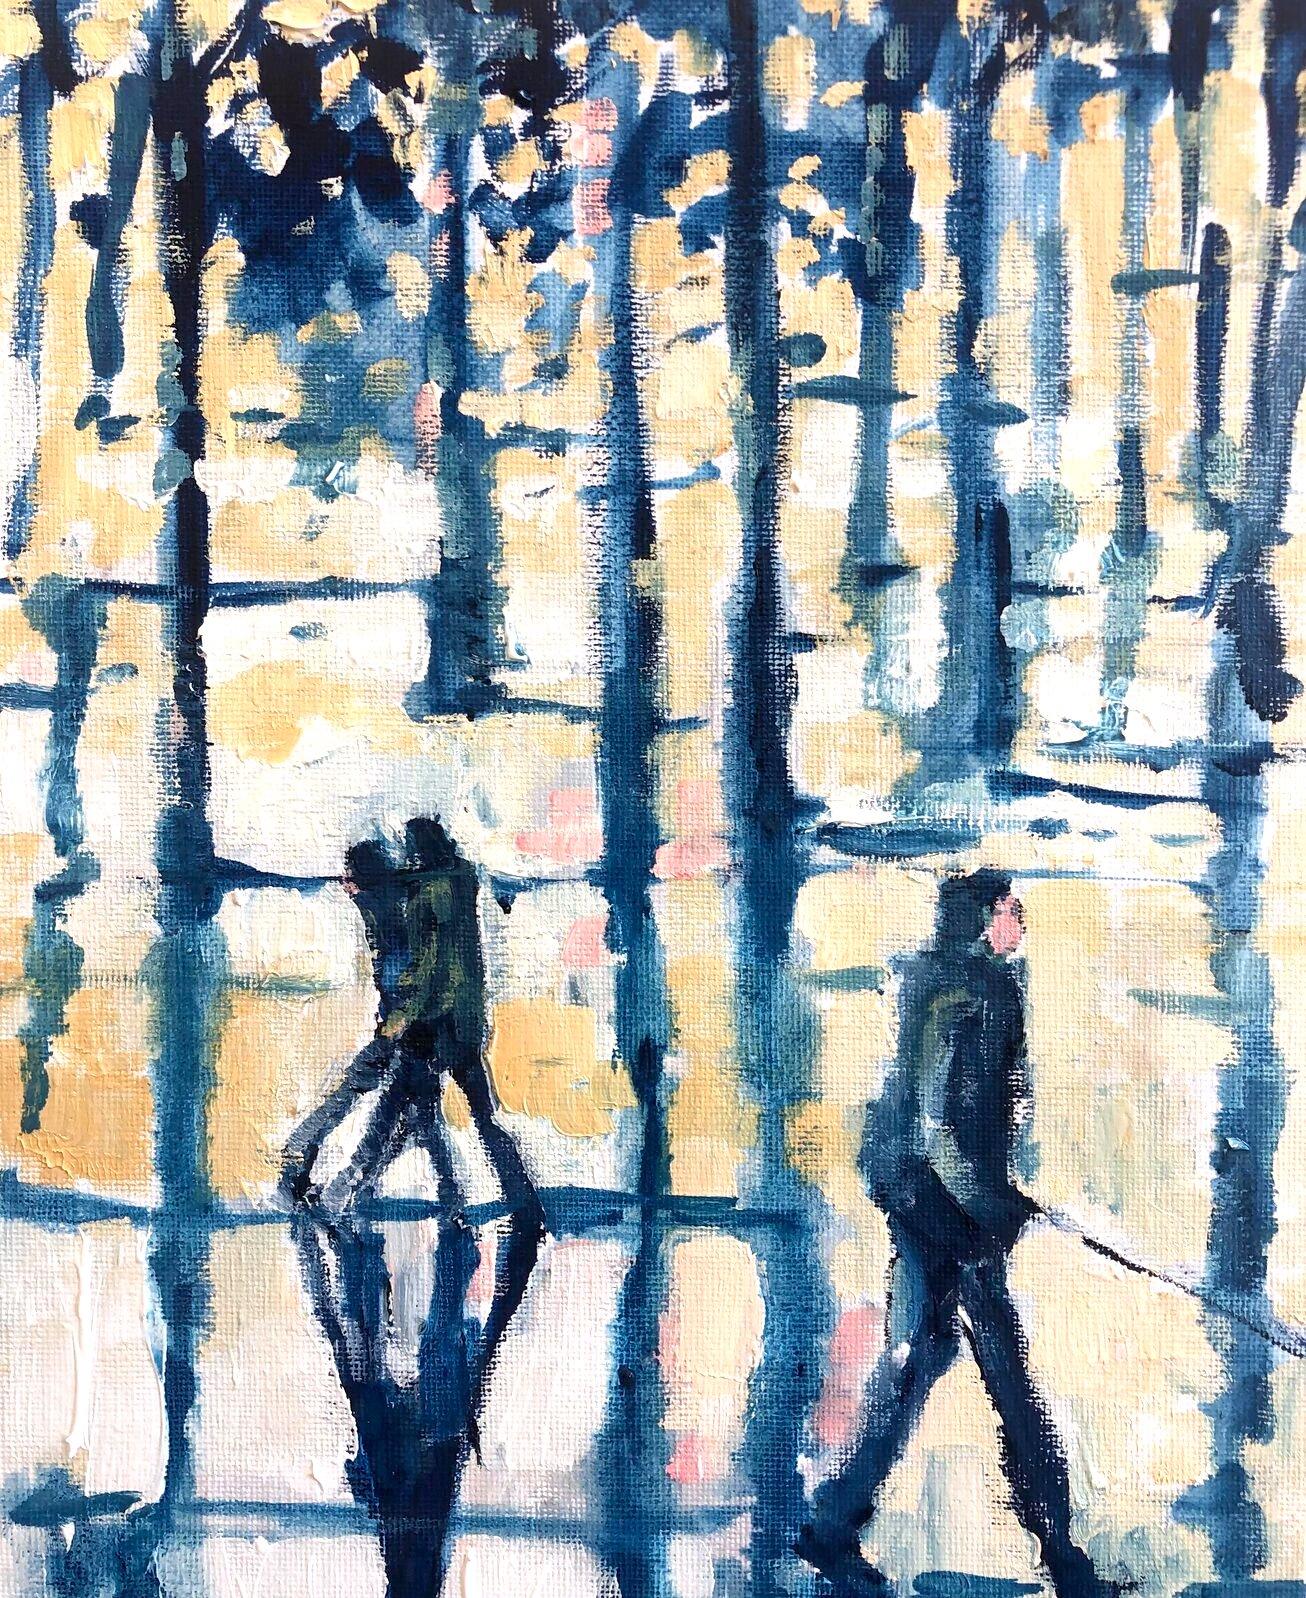 Richard Gower Figurative Painting - A Walk in The Park-original impressionism figurative landscape oil painting-art